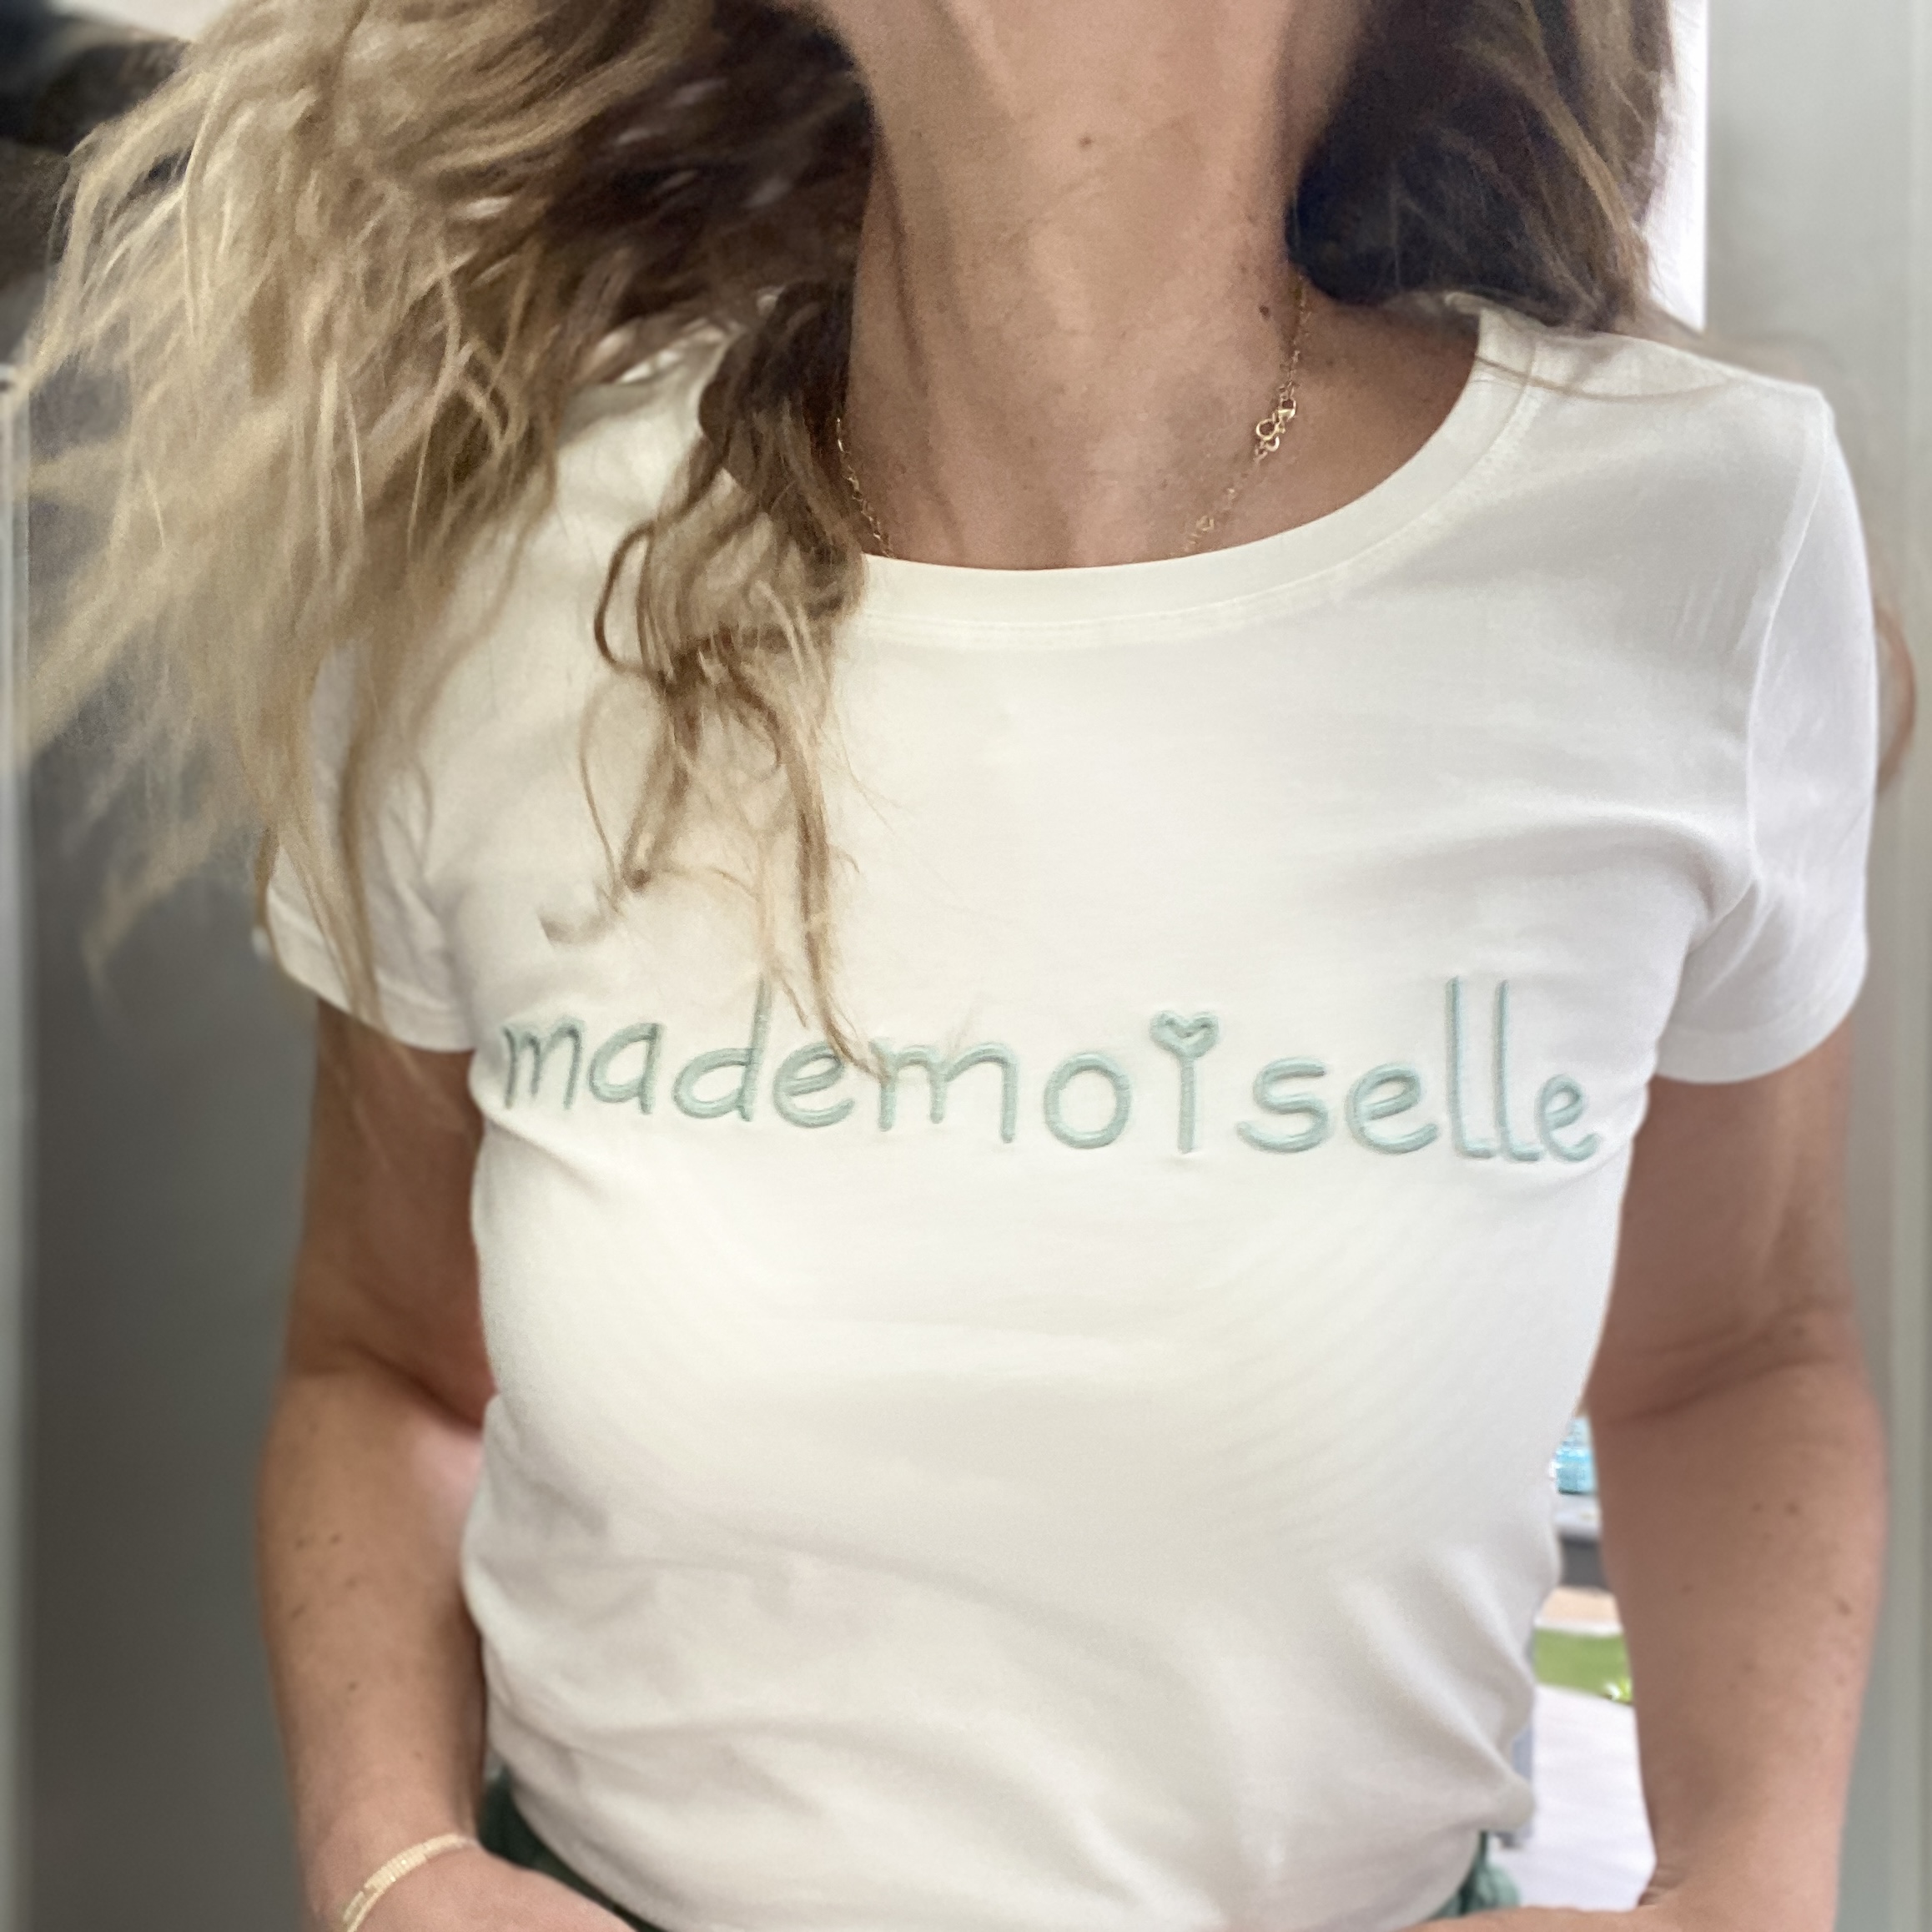 Tee-shirt blanc avec texte brodé en vert clair « mademoiselle »